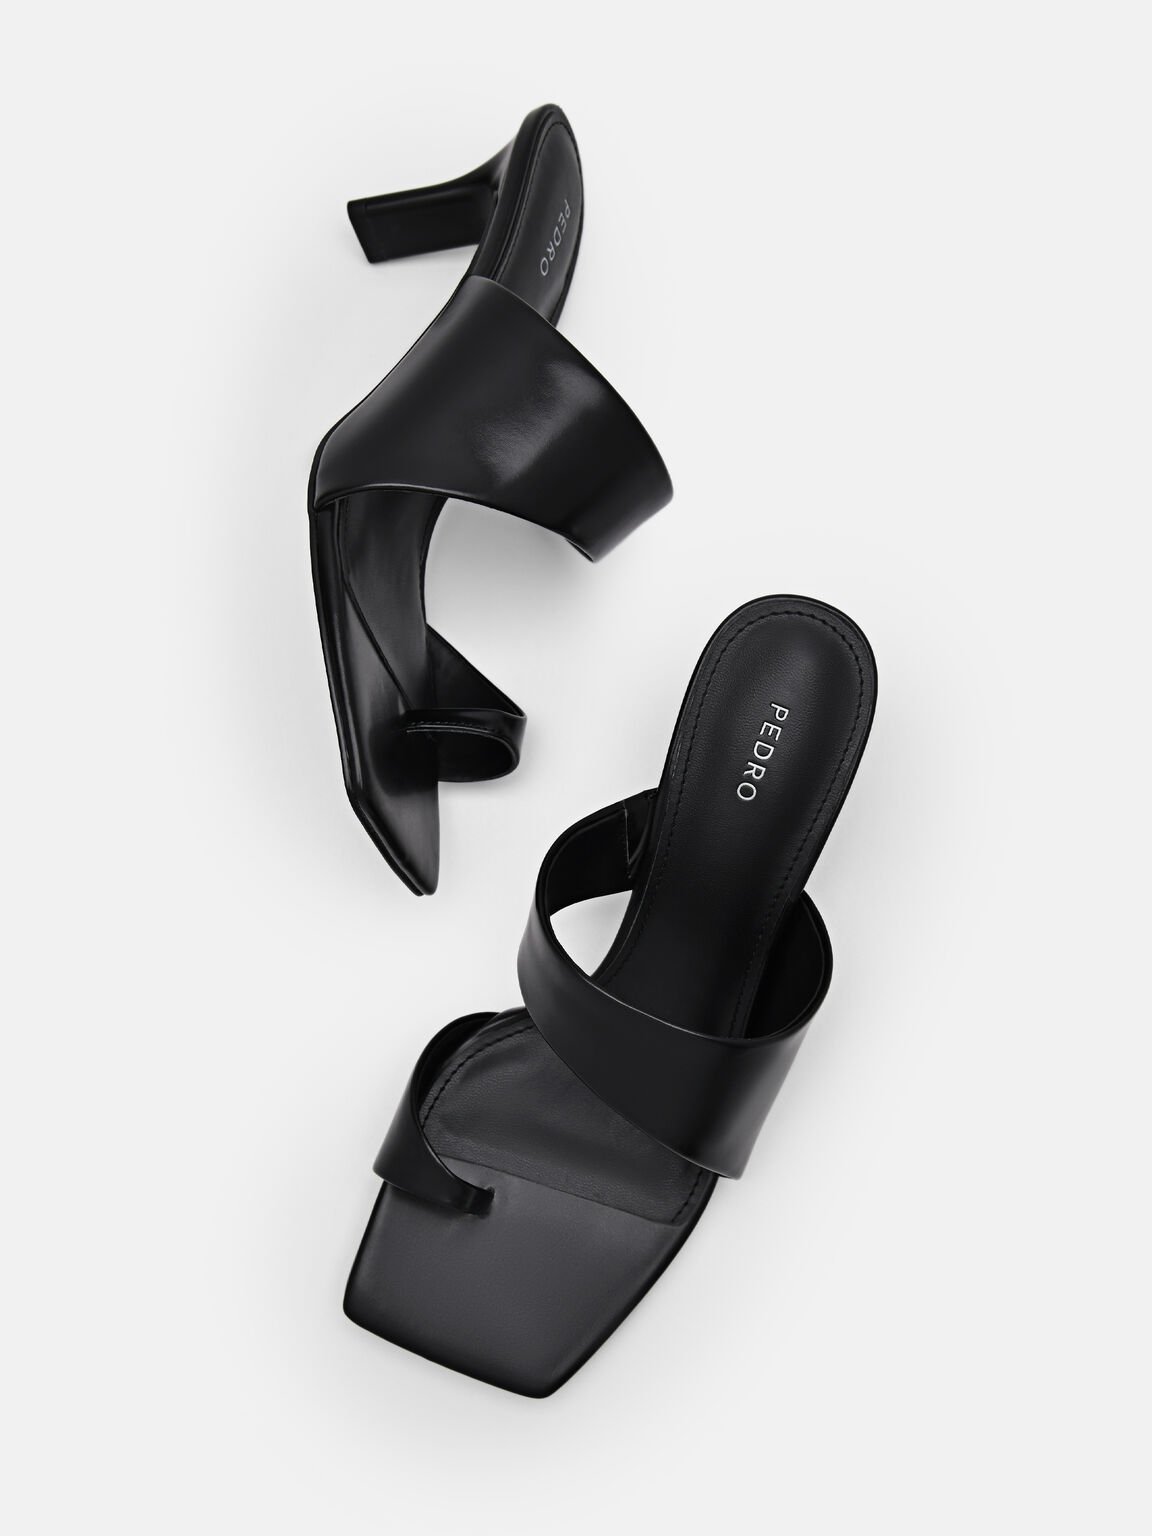 Rocco Leather Heel Sandals, Black, hi-res